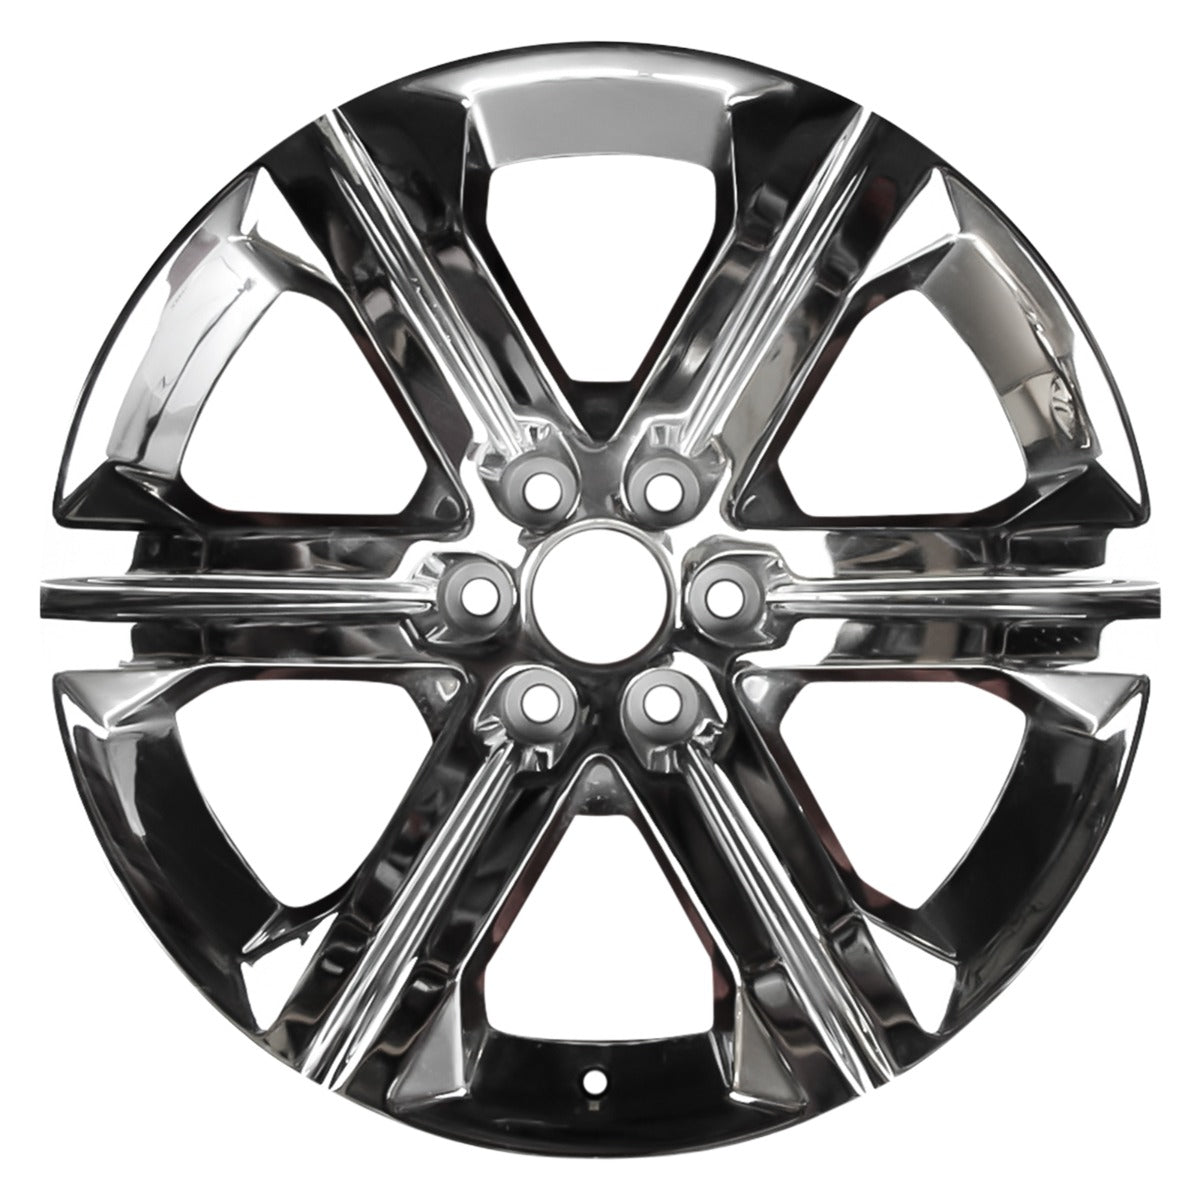 2014 Chevrolet Silverado 1500 22" OEM Wheel Rim W5667CHR